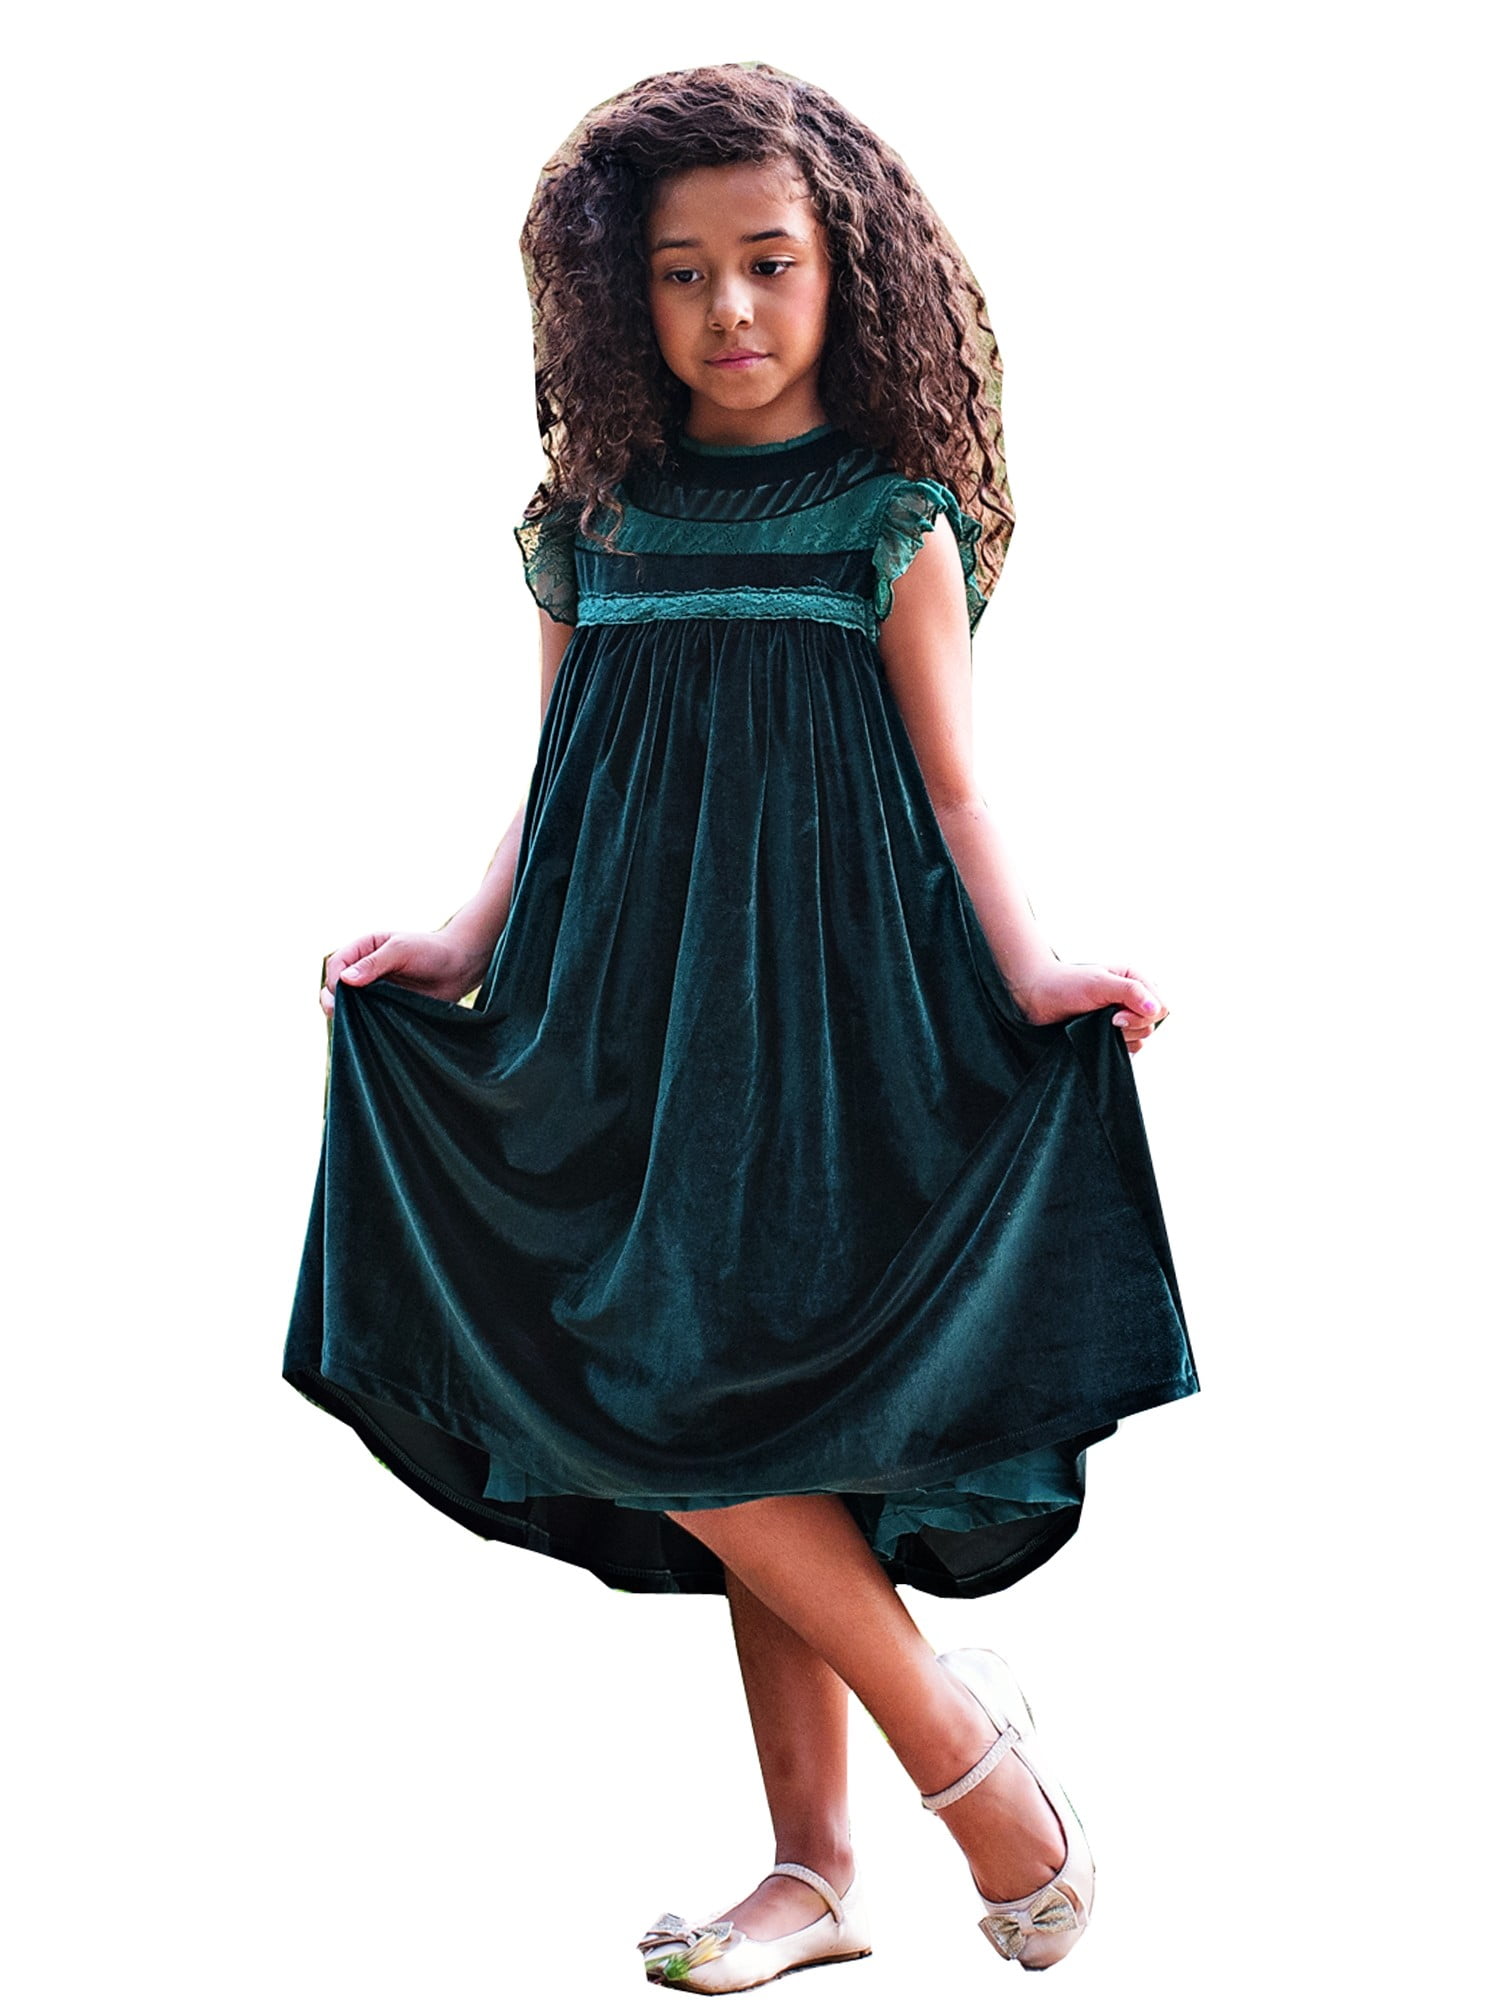 emerald green dress for little girl